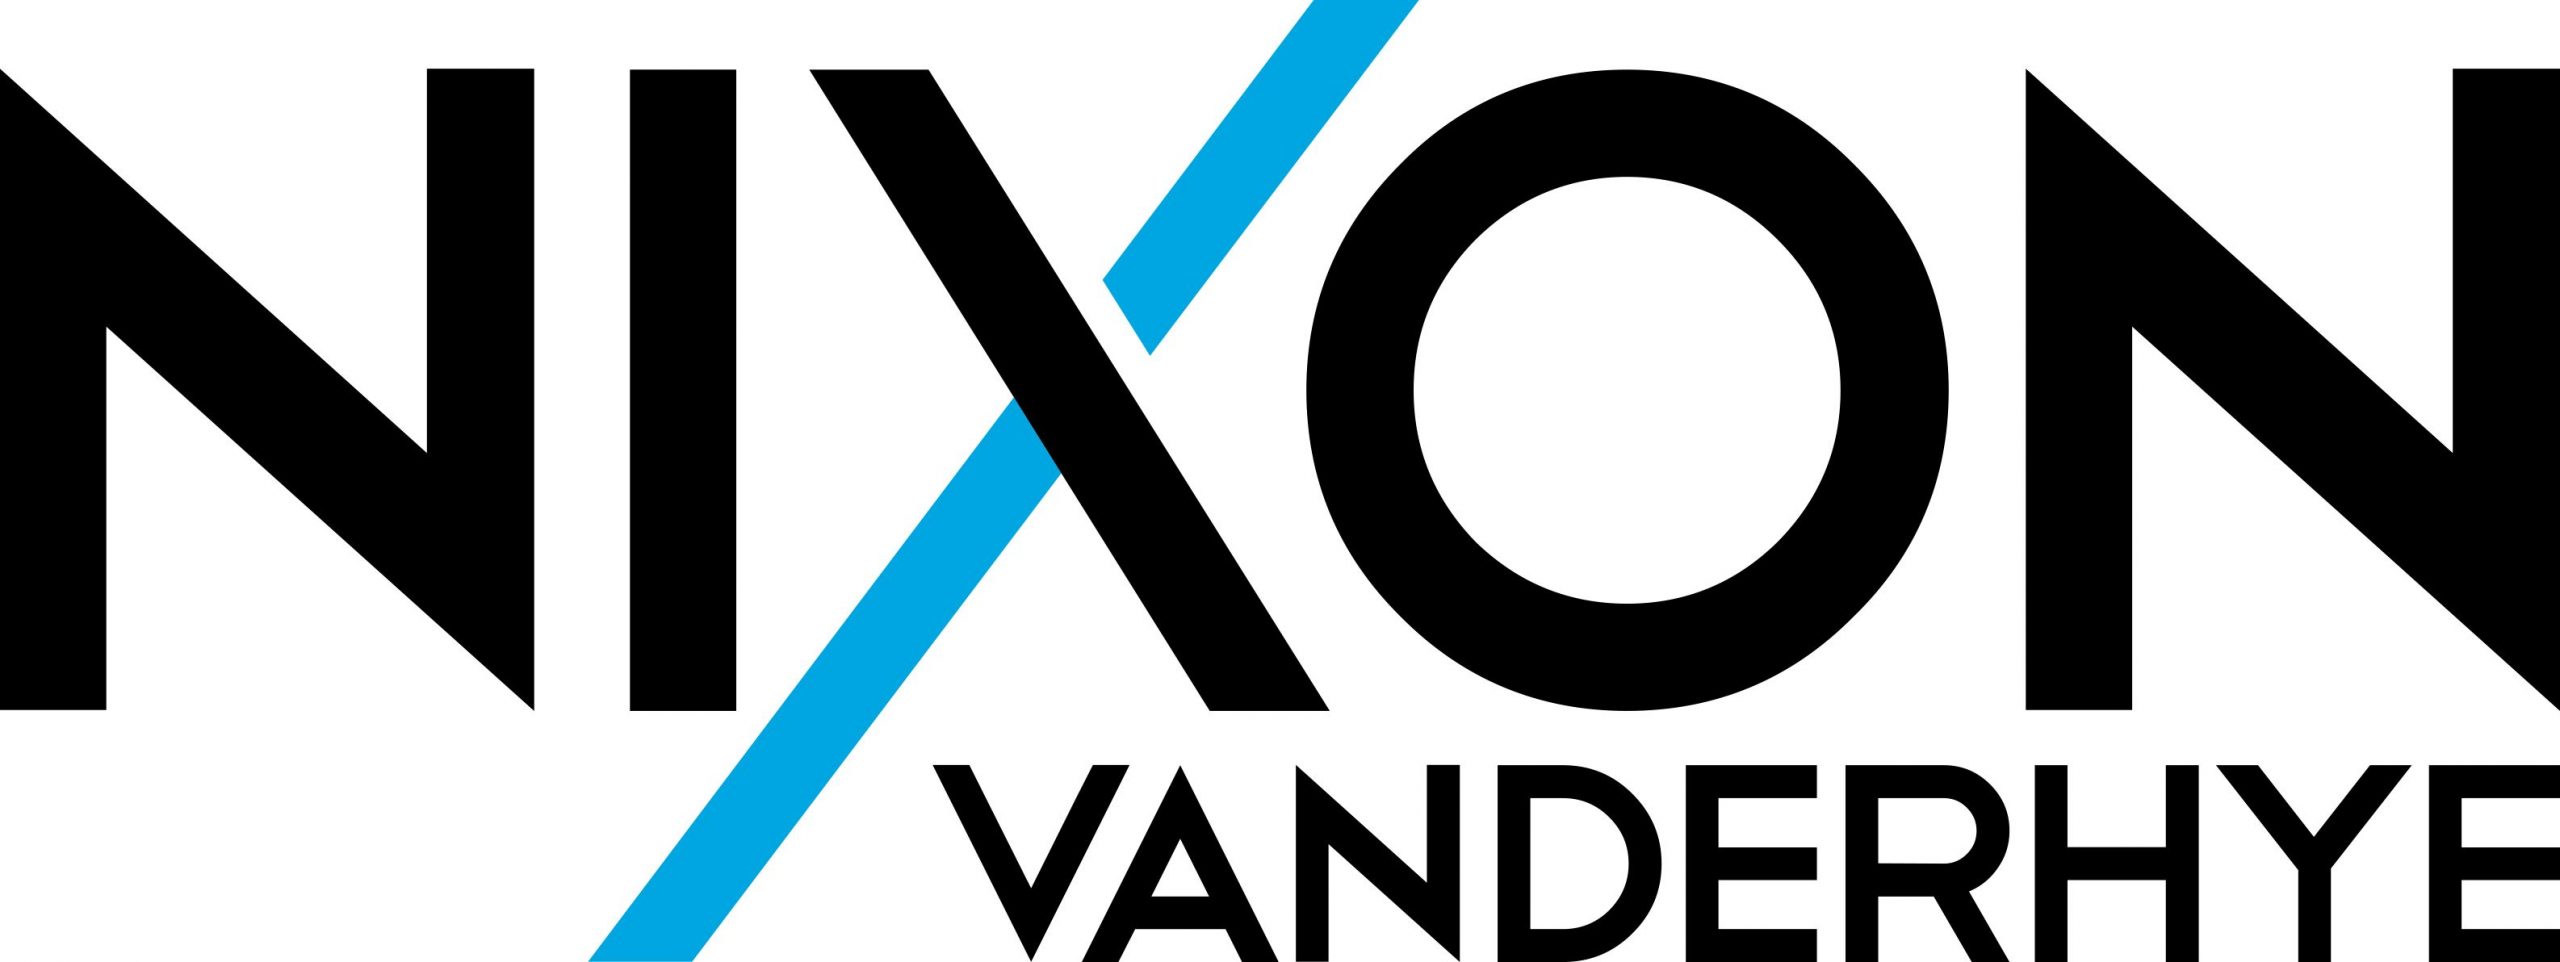 Logo of Nixon Vanderhye, an IP law firm based in the USA